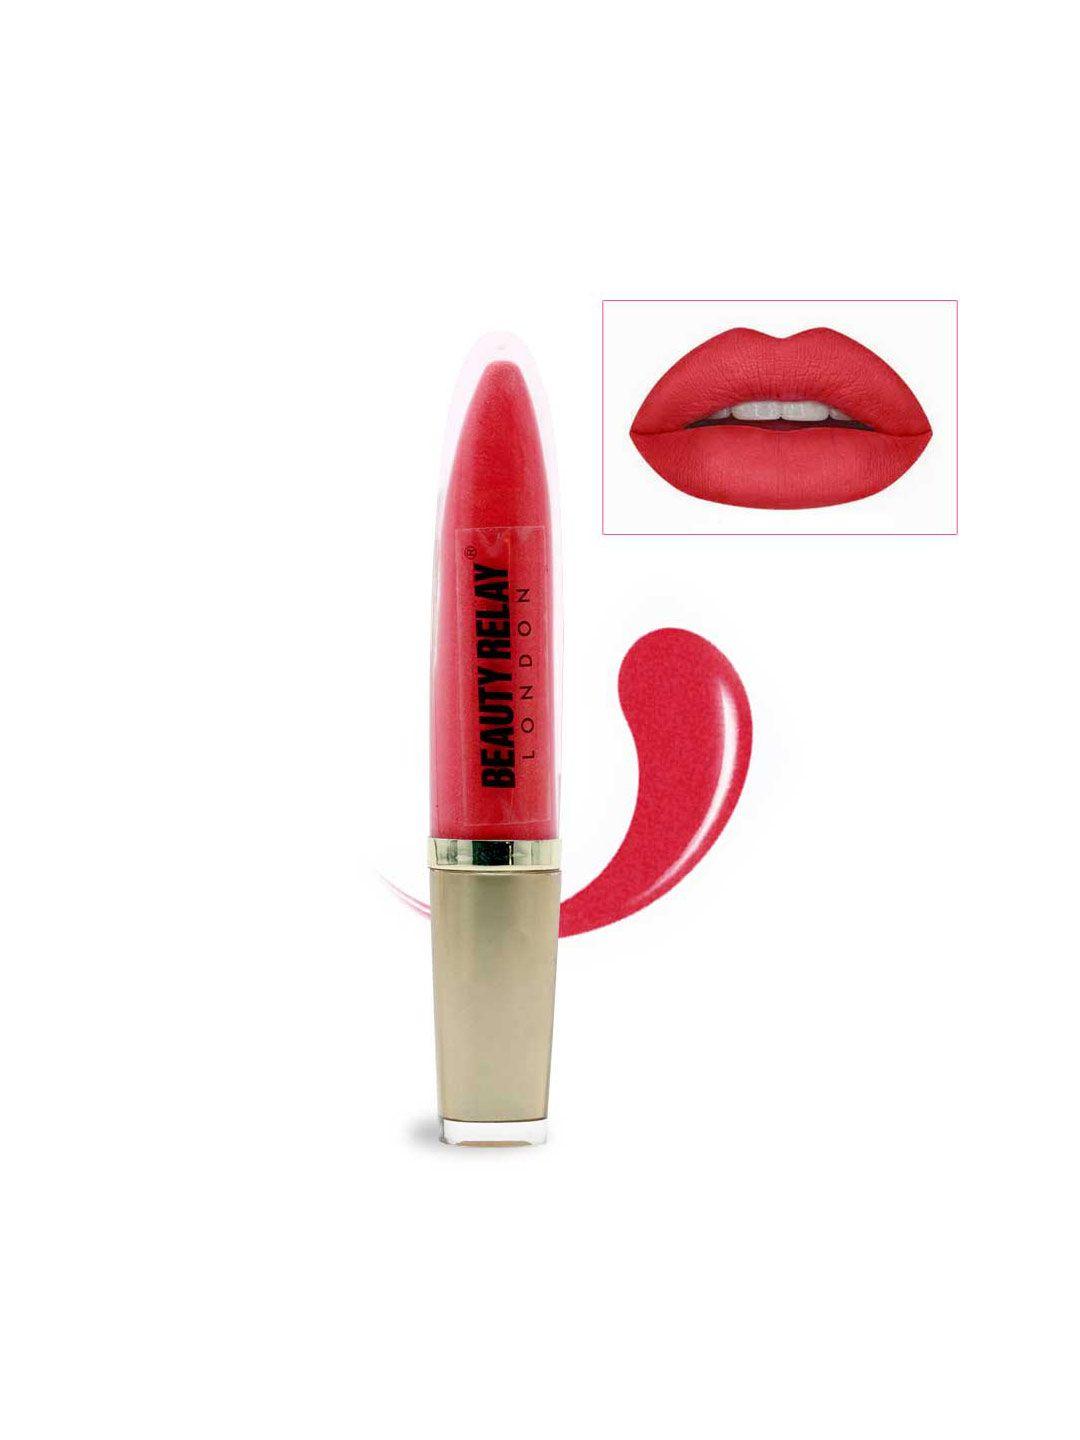 beautyrelay london marker lip & cheek gleam lip gloss 5g - wild rose